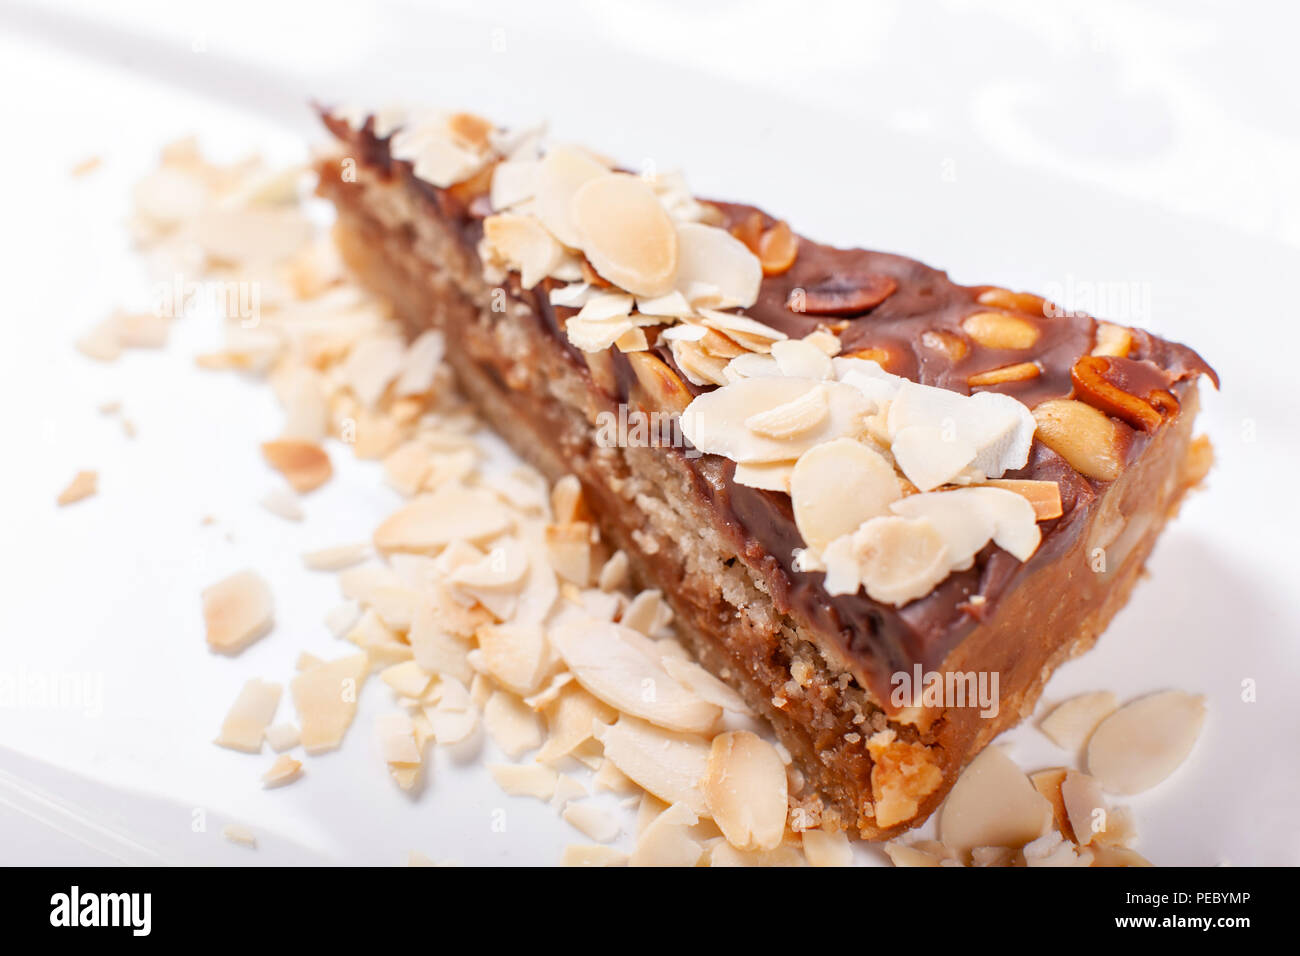 Nut Cake Recipes | LoveToKnow